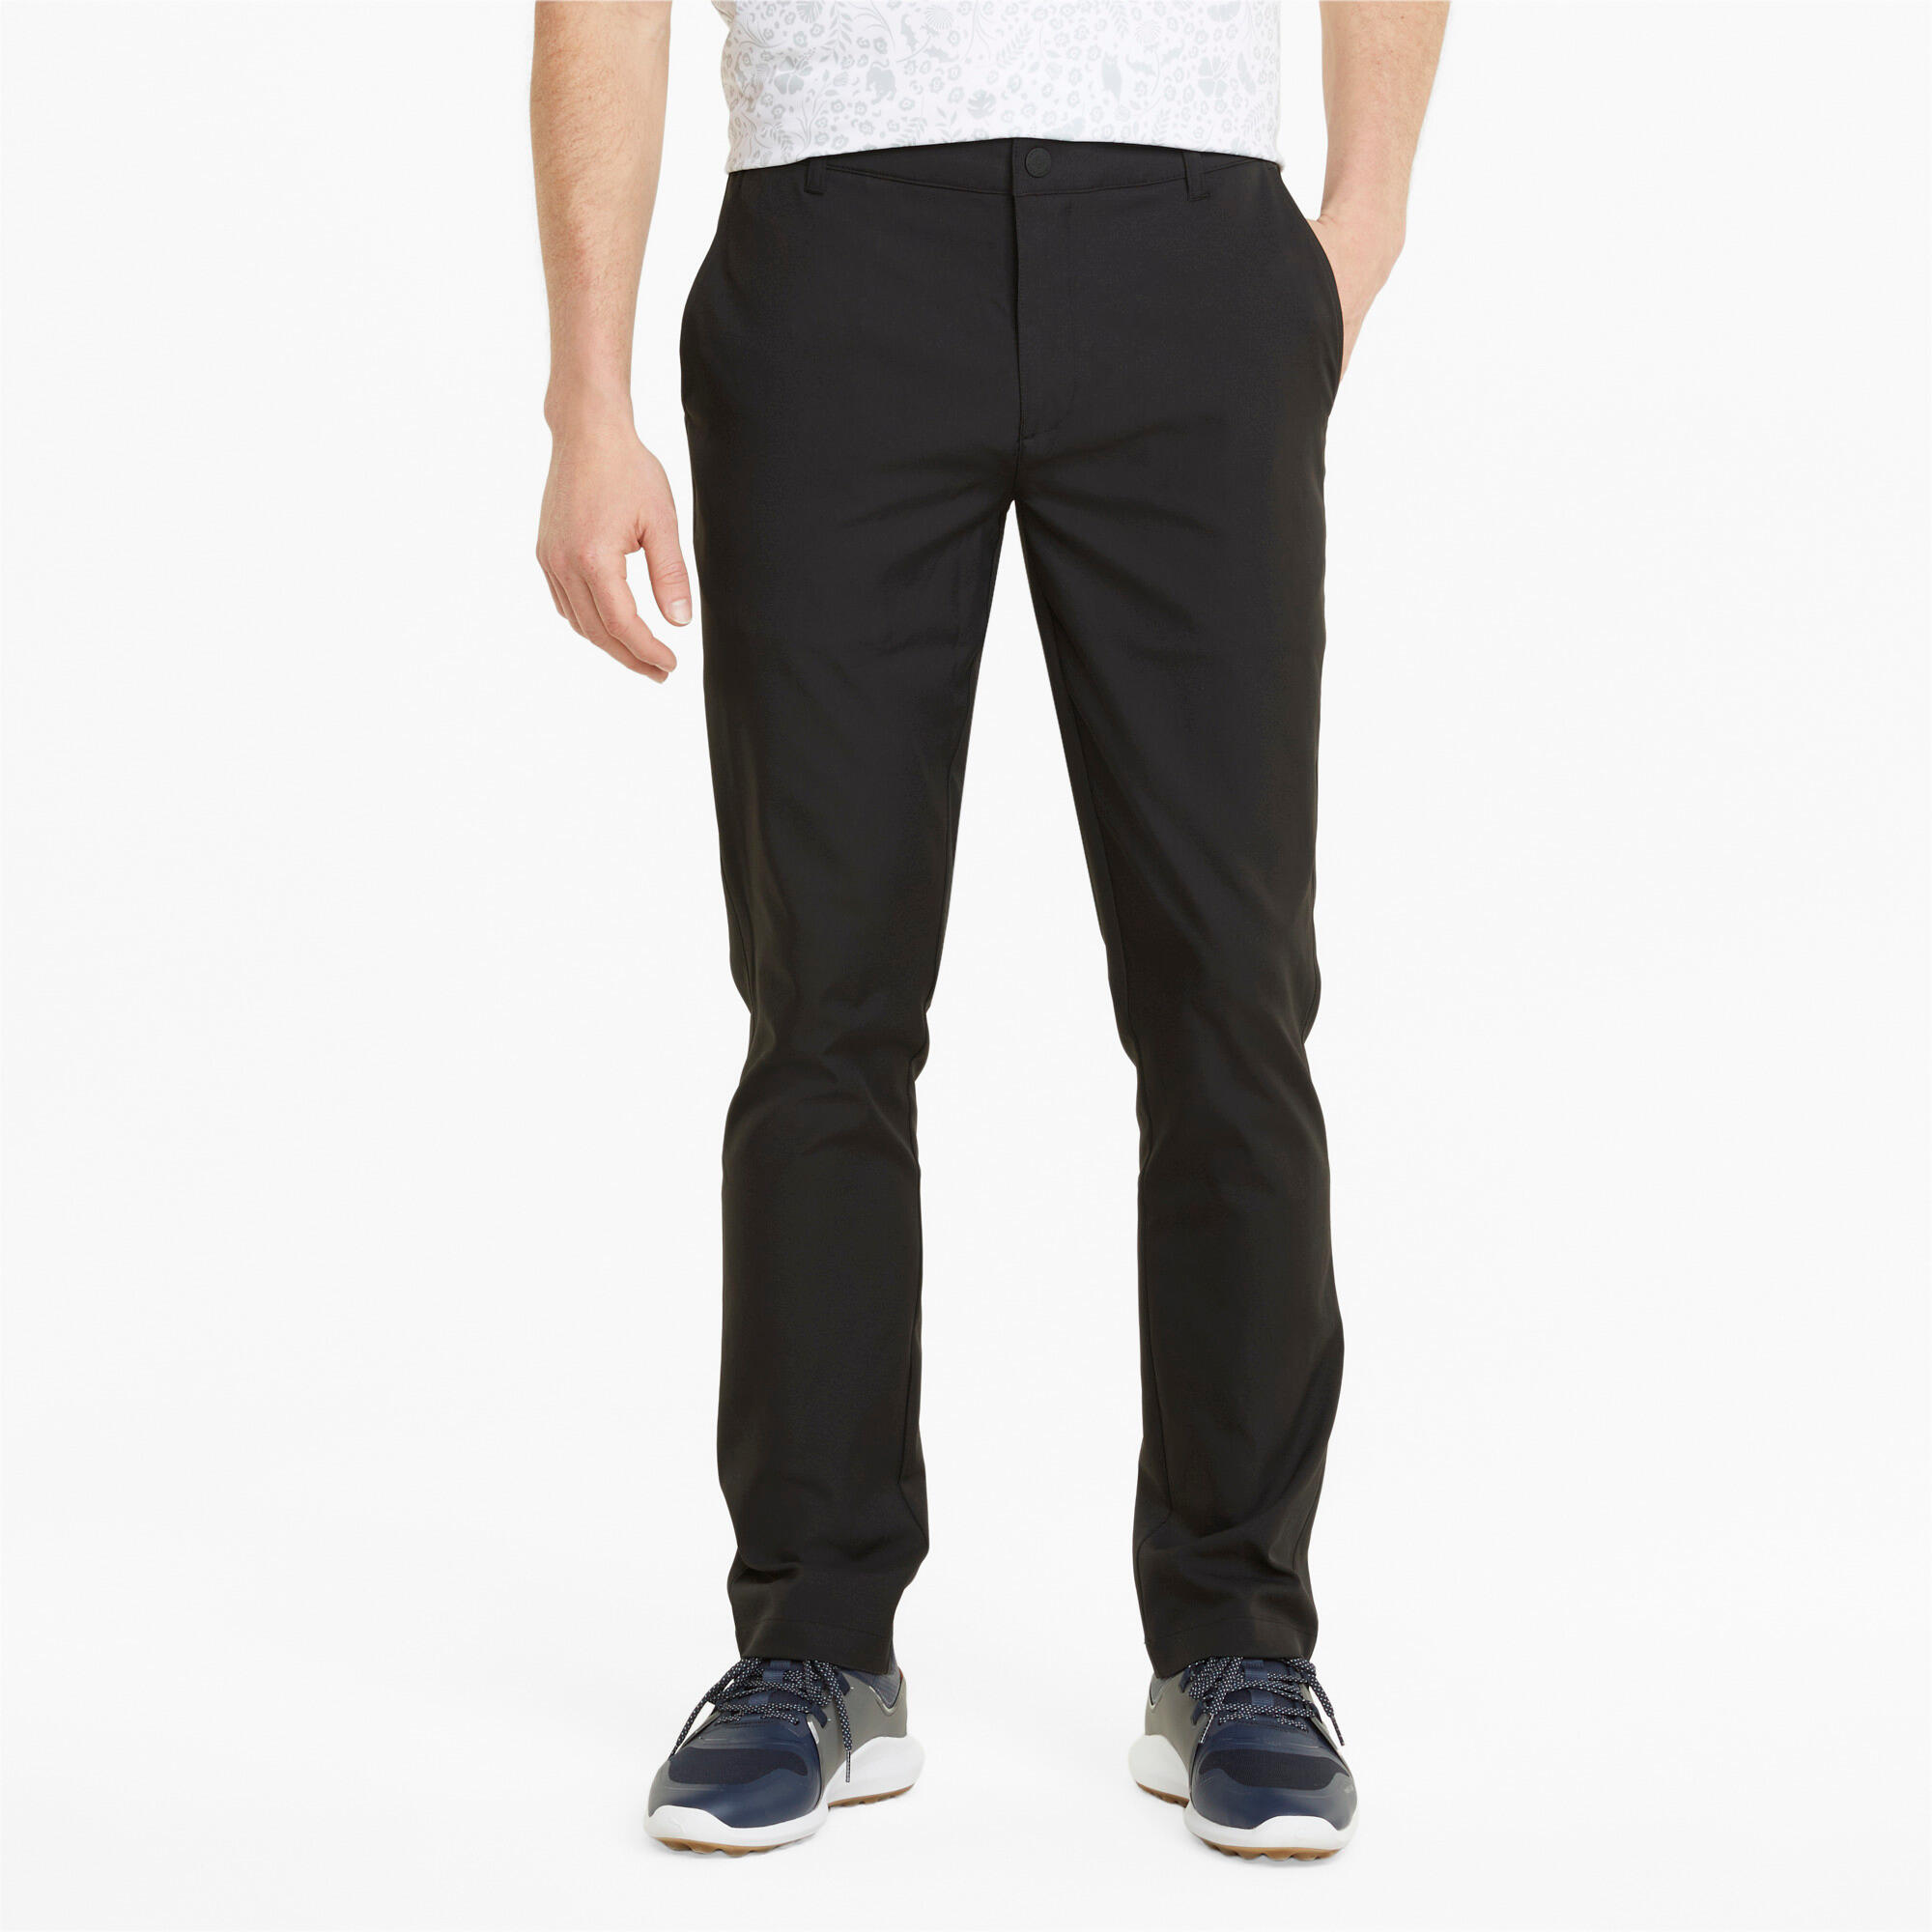 PUMA Mens Jackpot Tailored Golf Pants Trousers - Black 2/6